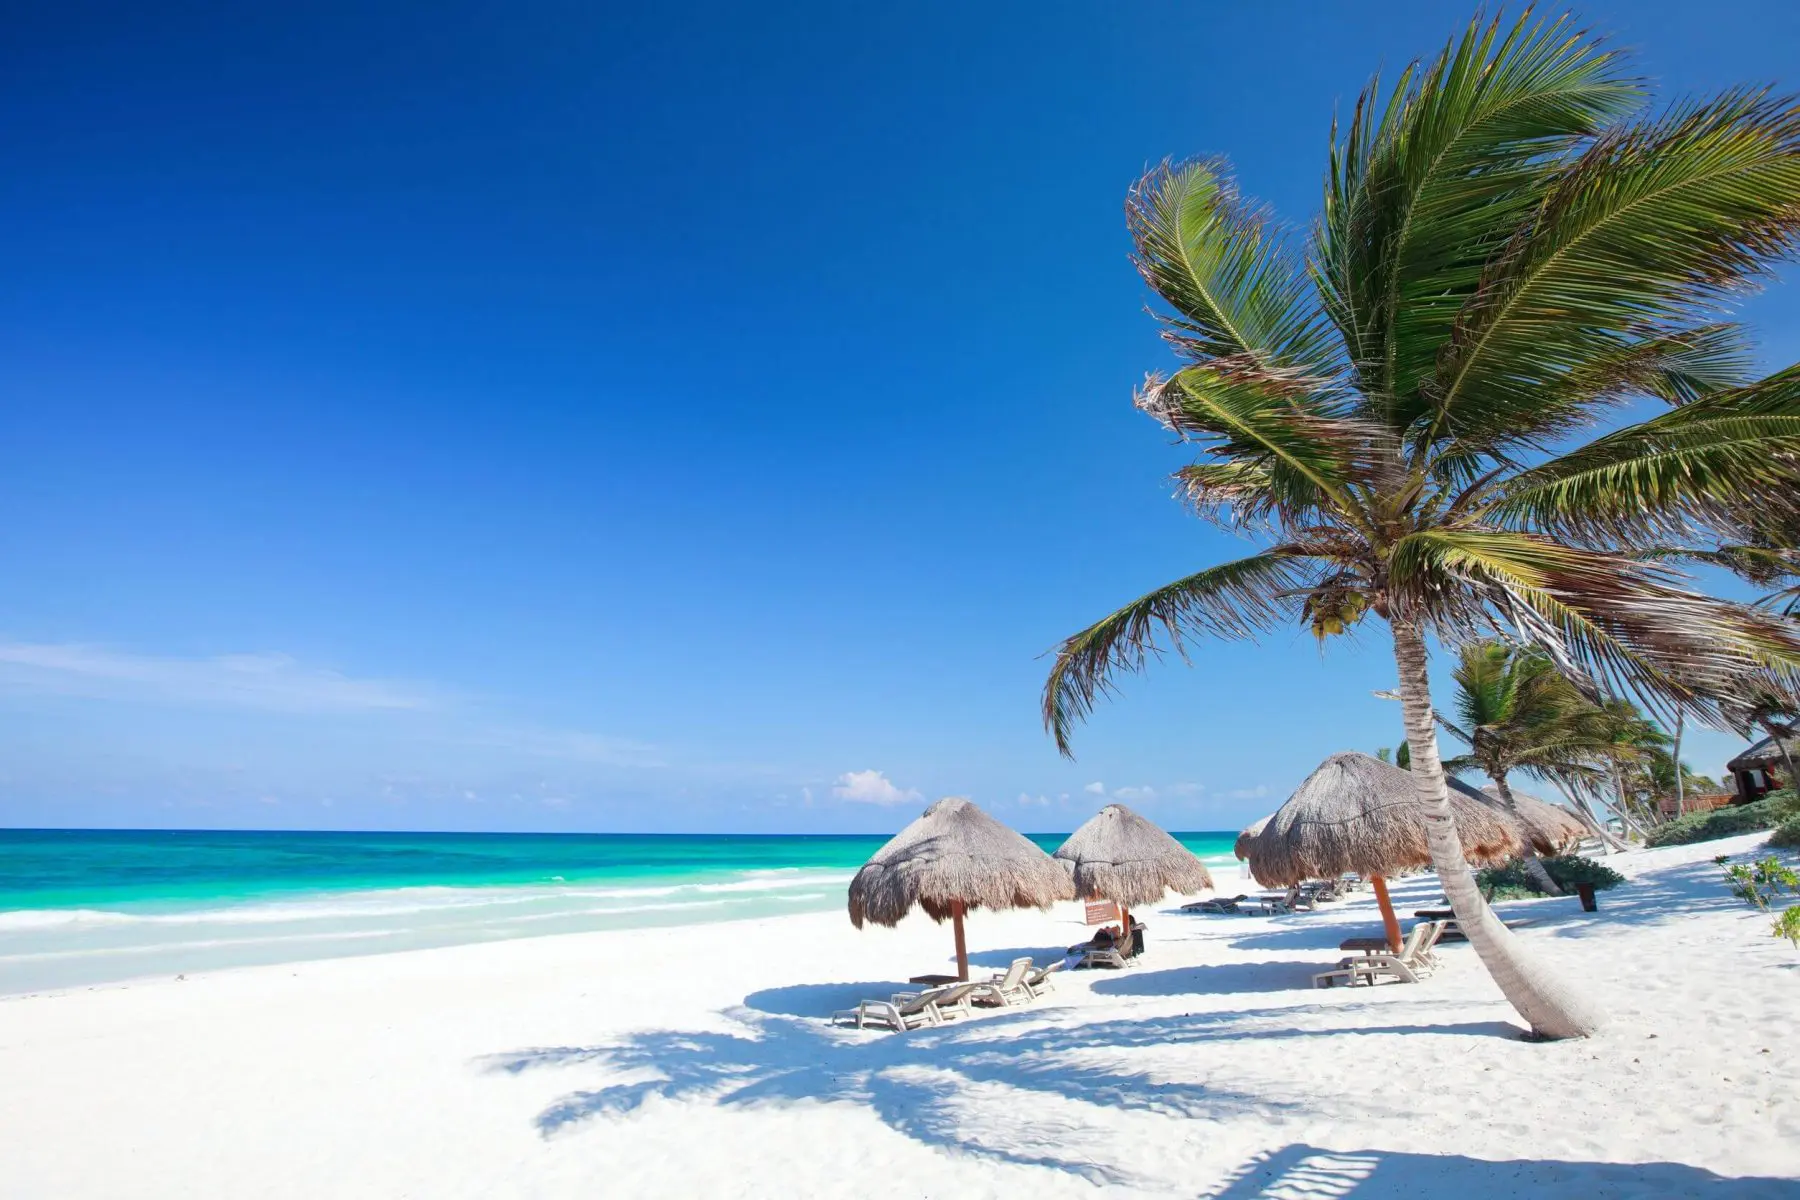 Tulum beach with palm trees